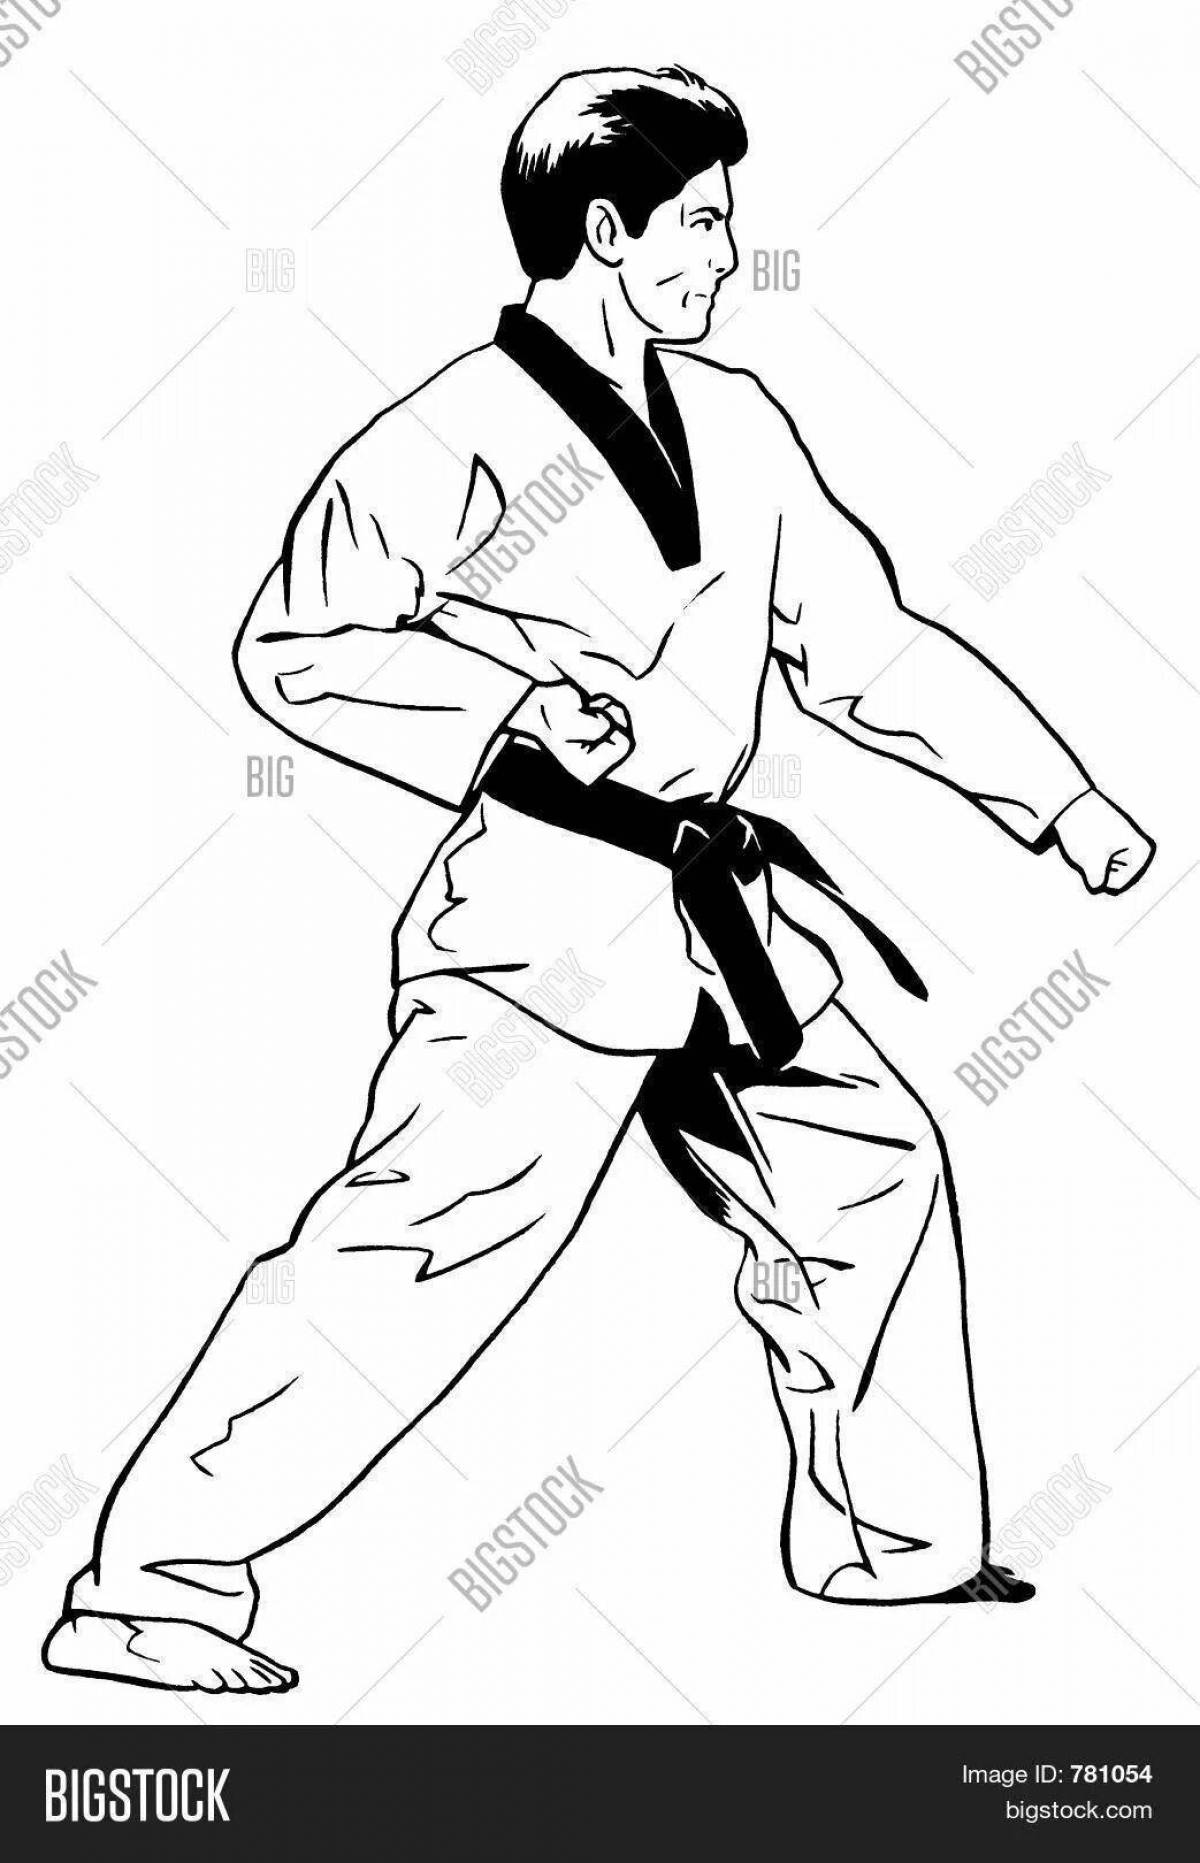 Distinctive taekwondo coloring page